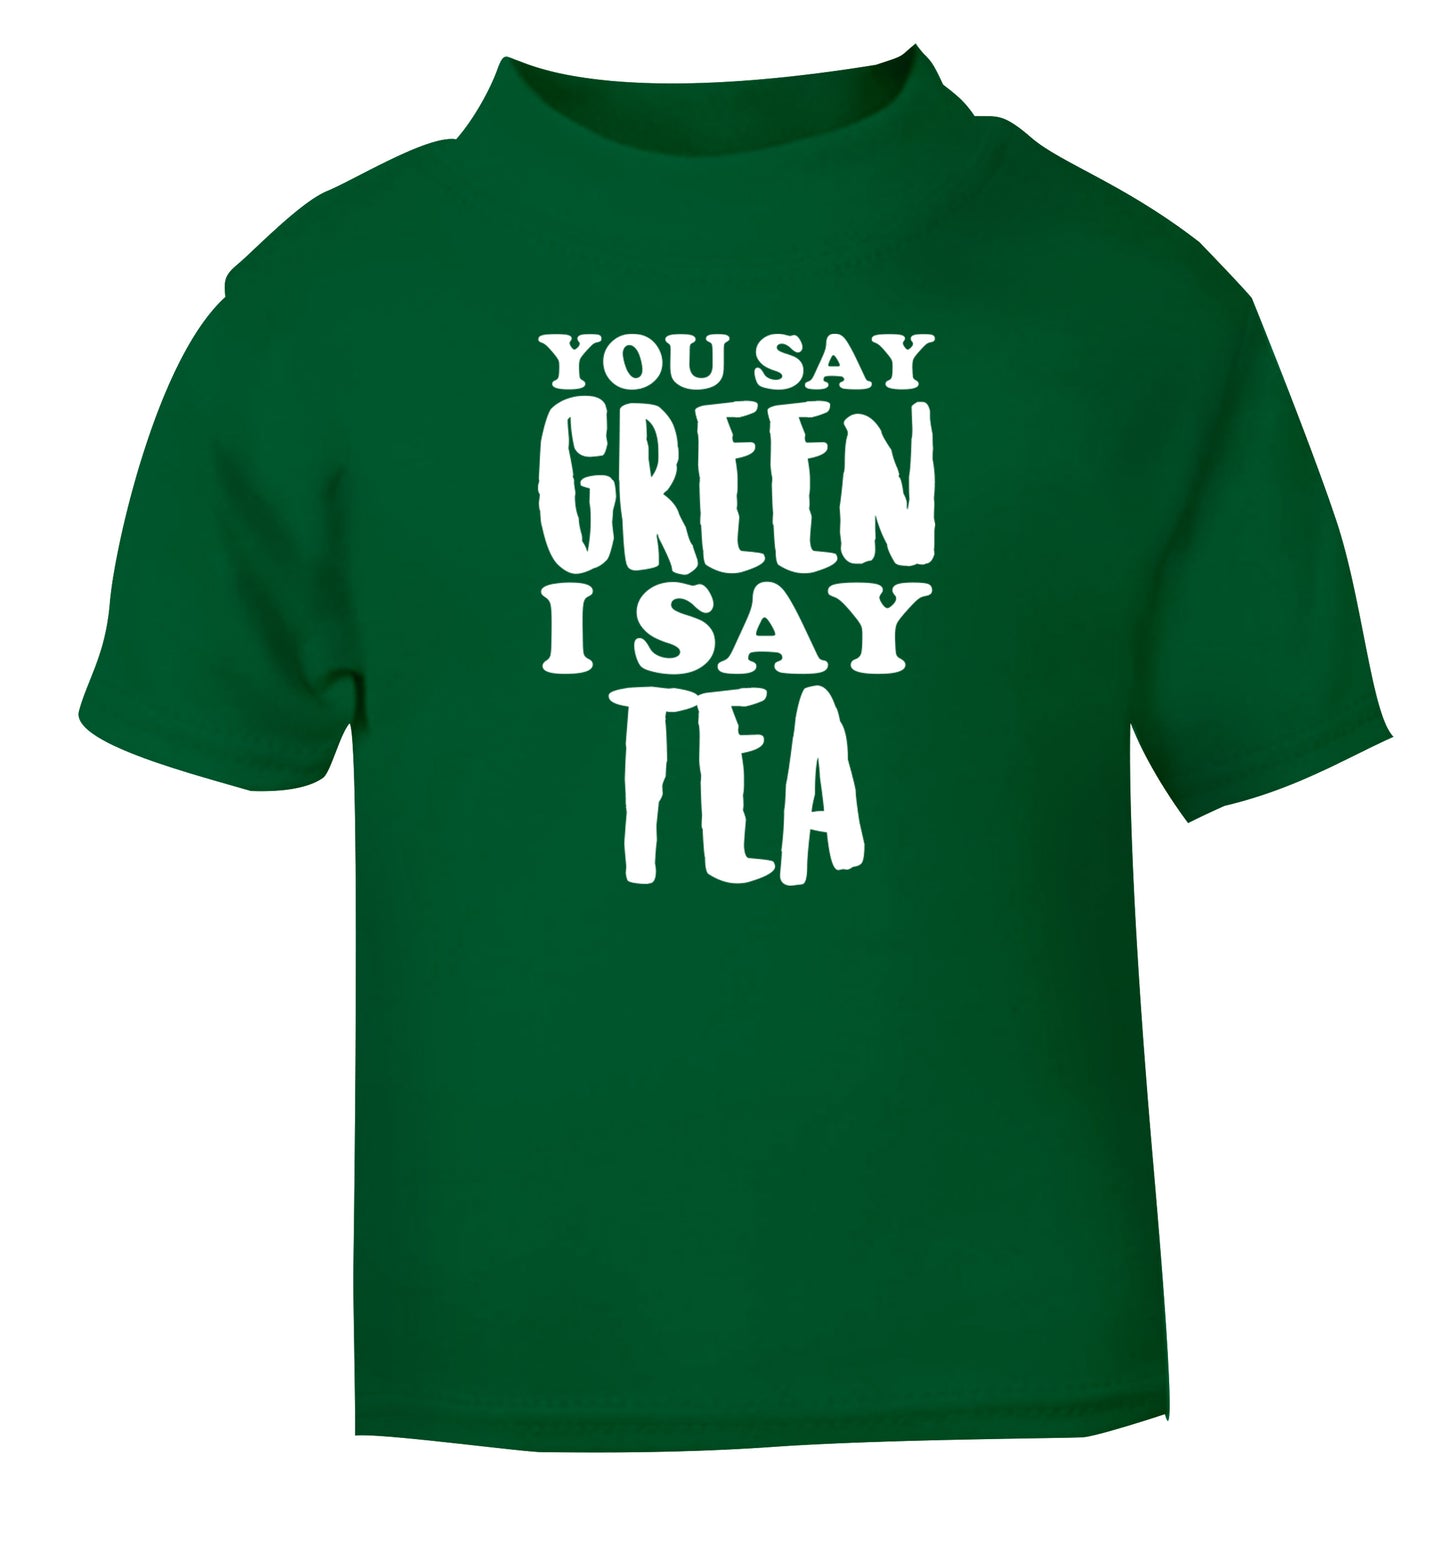 You say green I say tea! green Baby Toddler Tshirt 2 Years